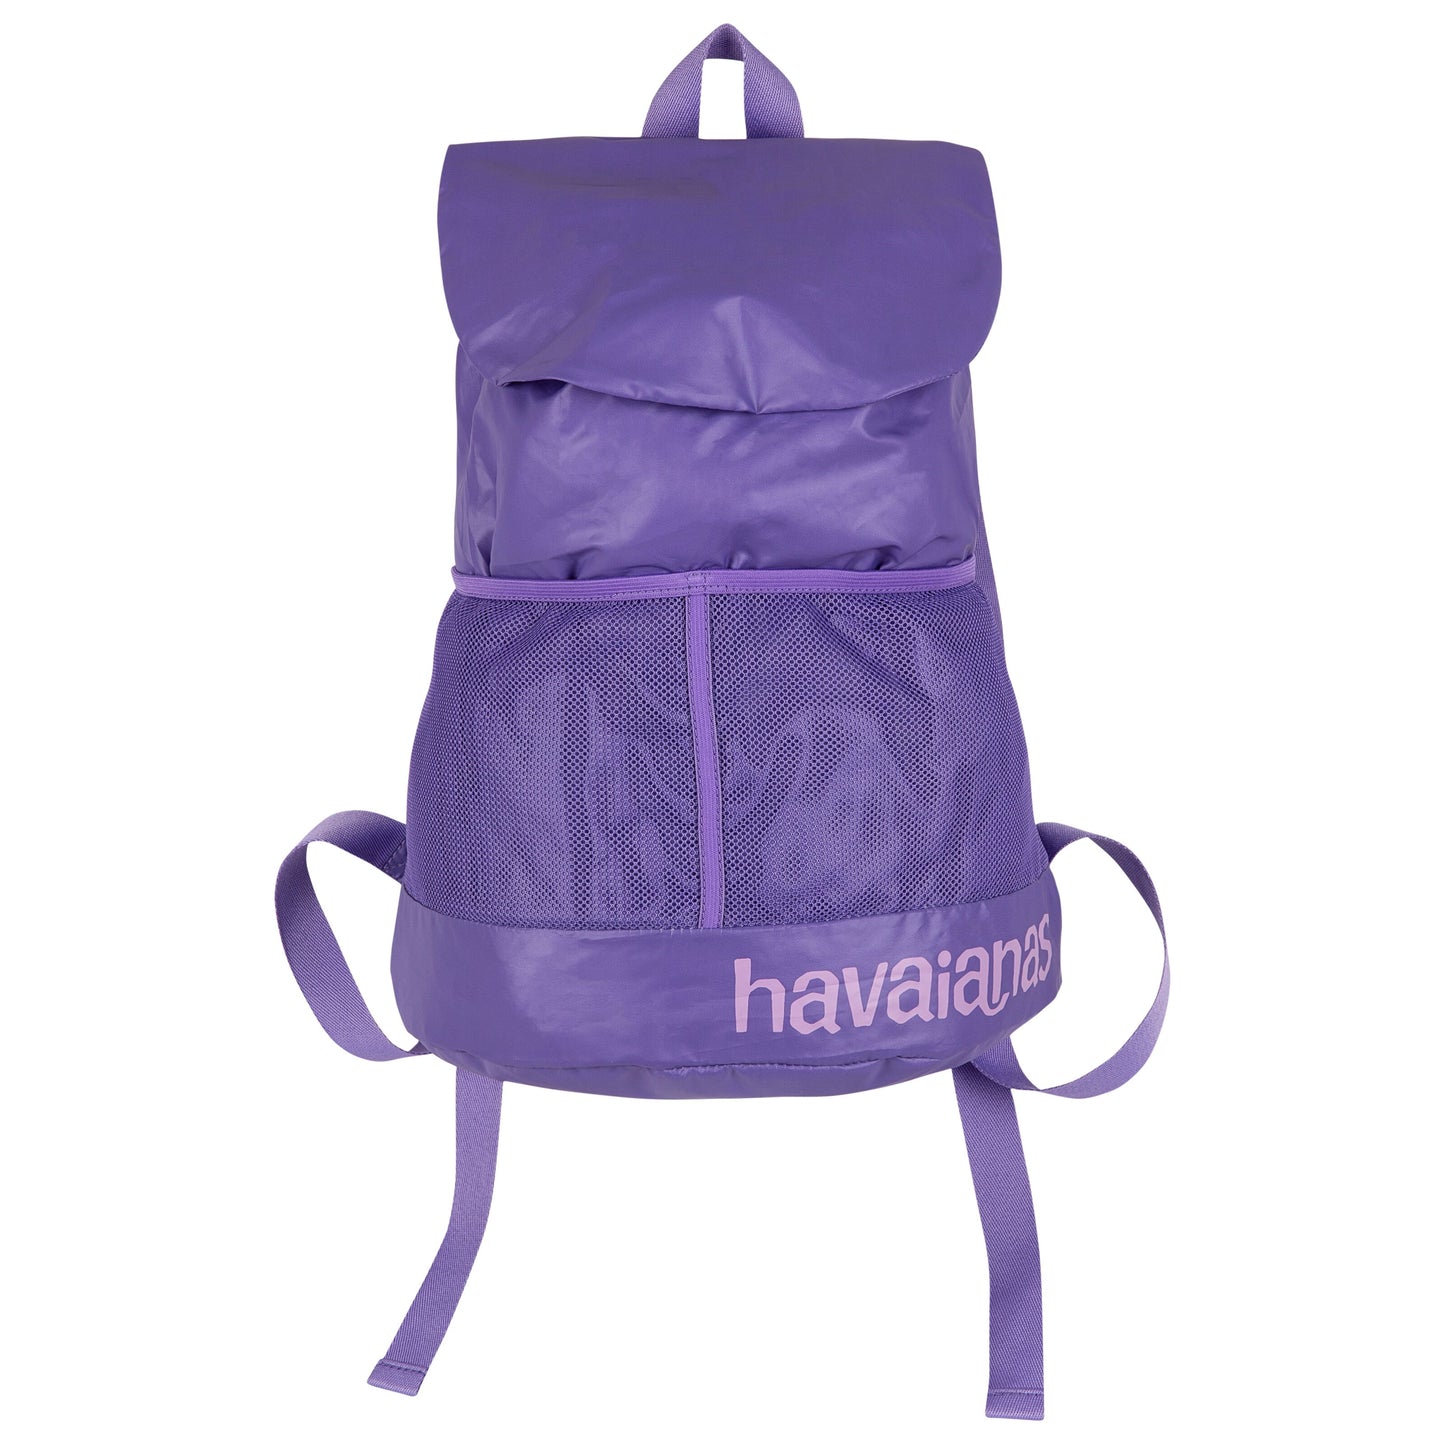 Havaianas Backpack